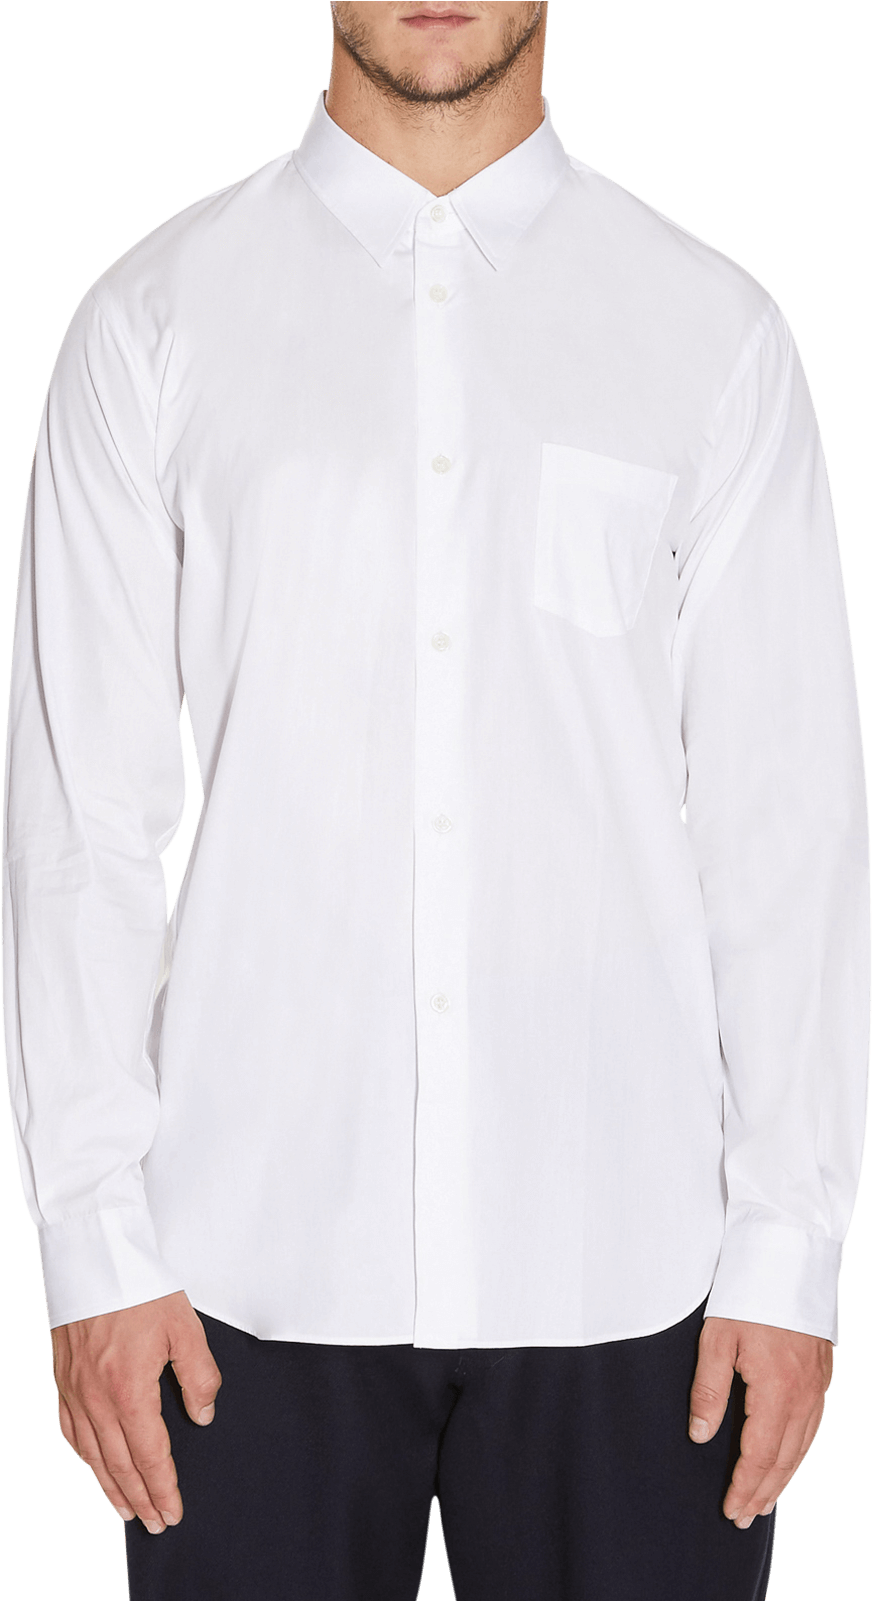 White Ralph Lauren Shirt Model PNG image